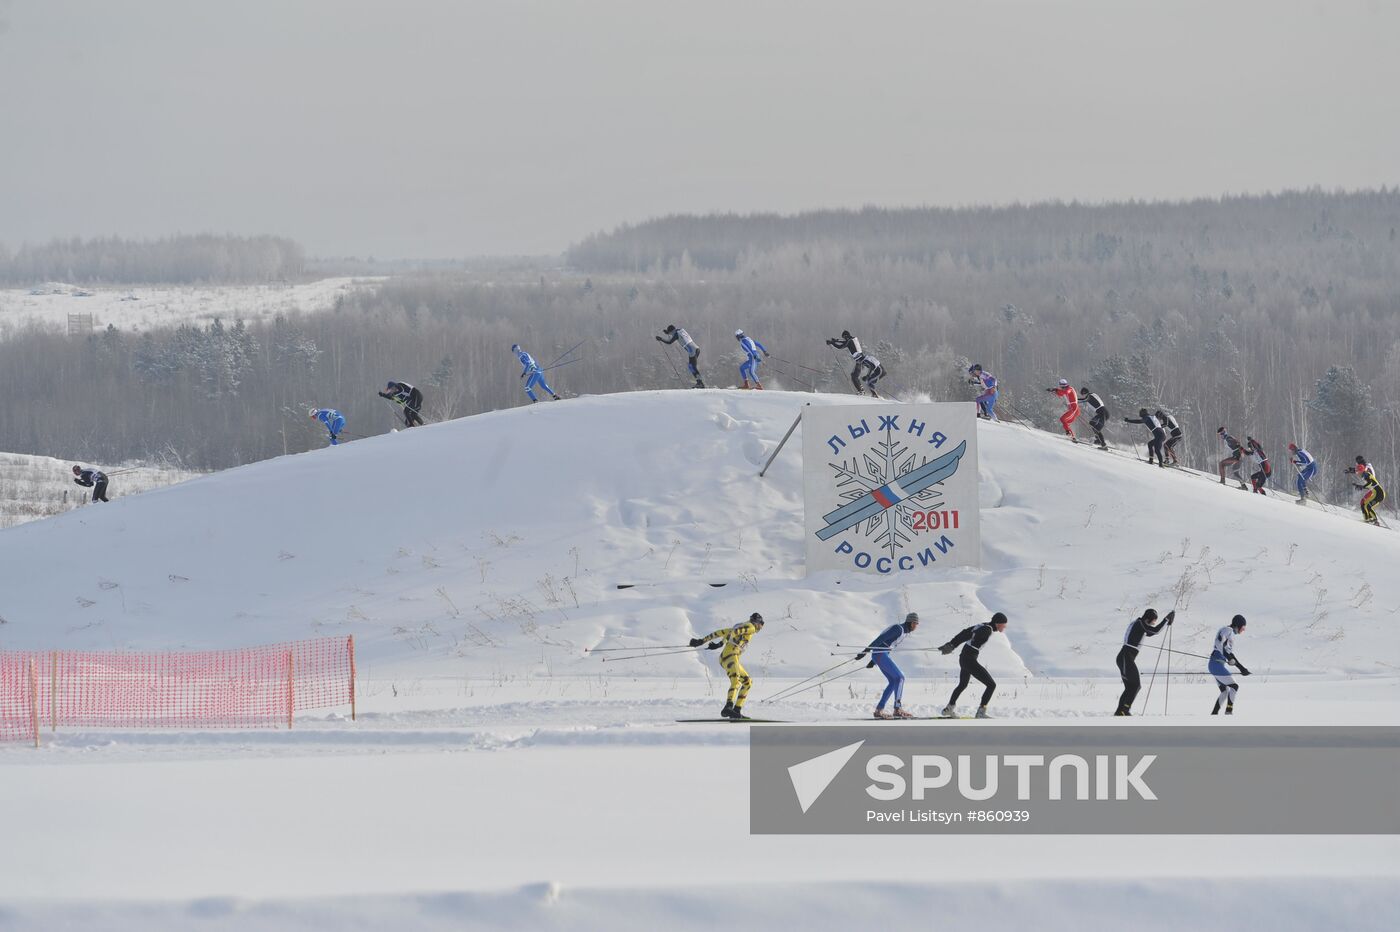 Russian Ski Track 2011 nationwide race in Sverdlovsk Region